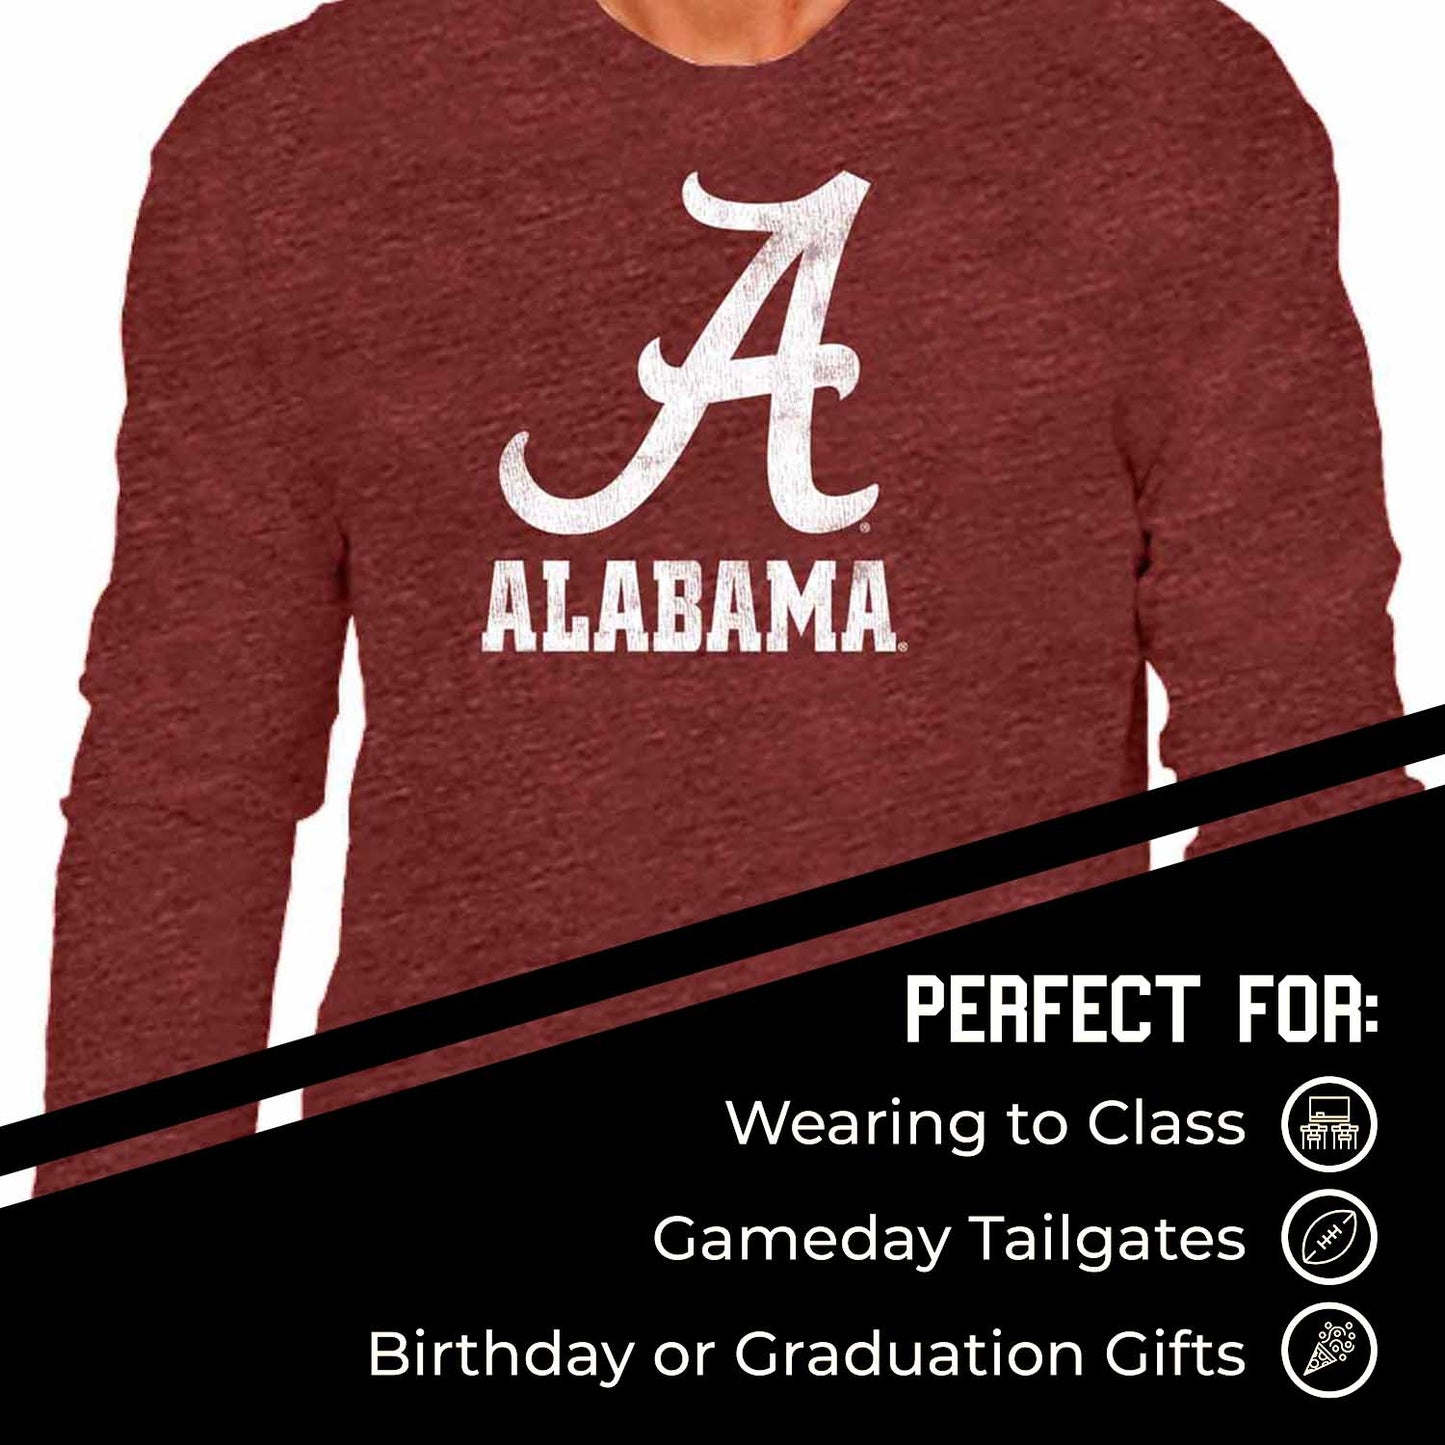 Alabama Crimson Tide NCAA MVP Adult Long-Sleeve Shirt - Crimson